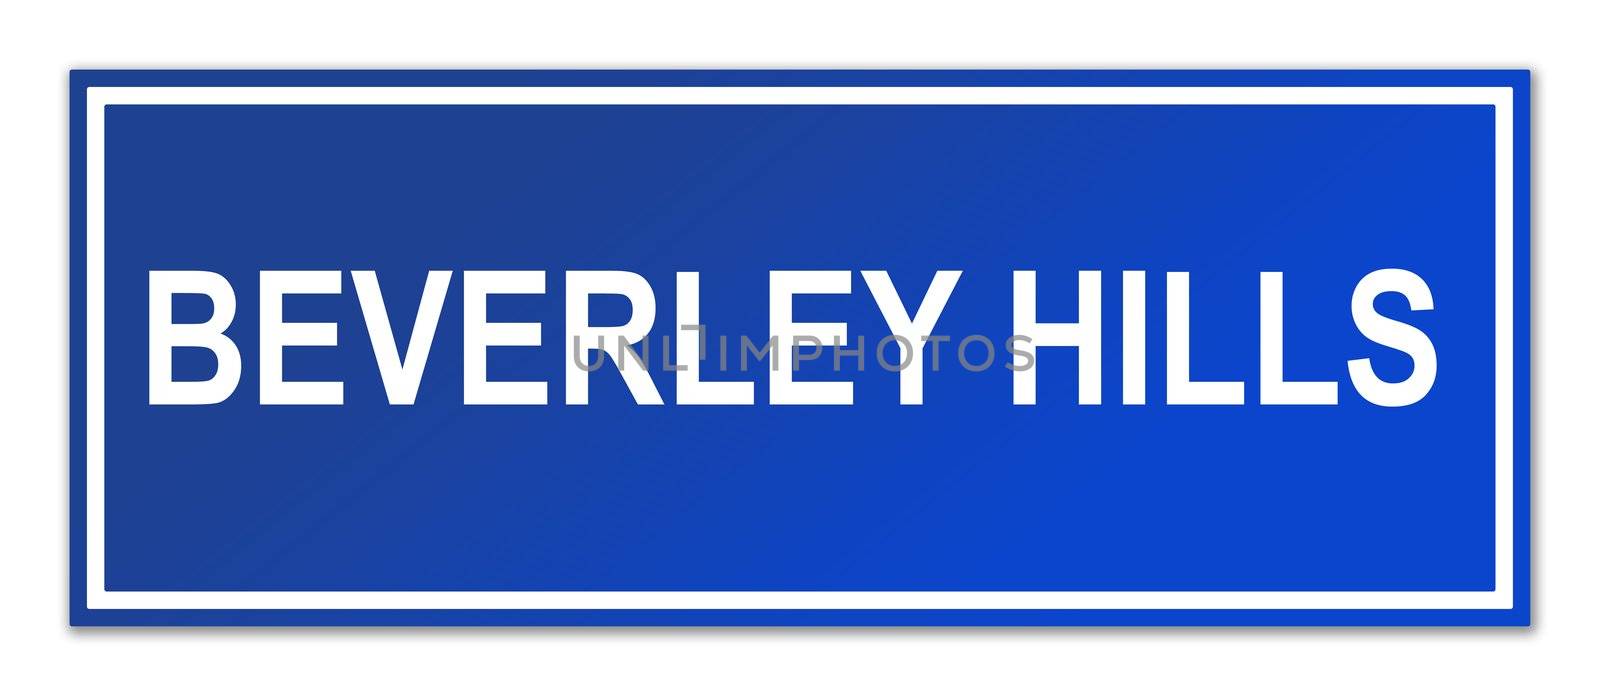 Beverley Hills street sign by speedfighter